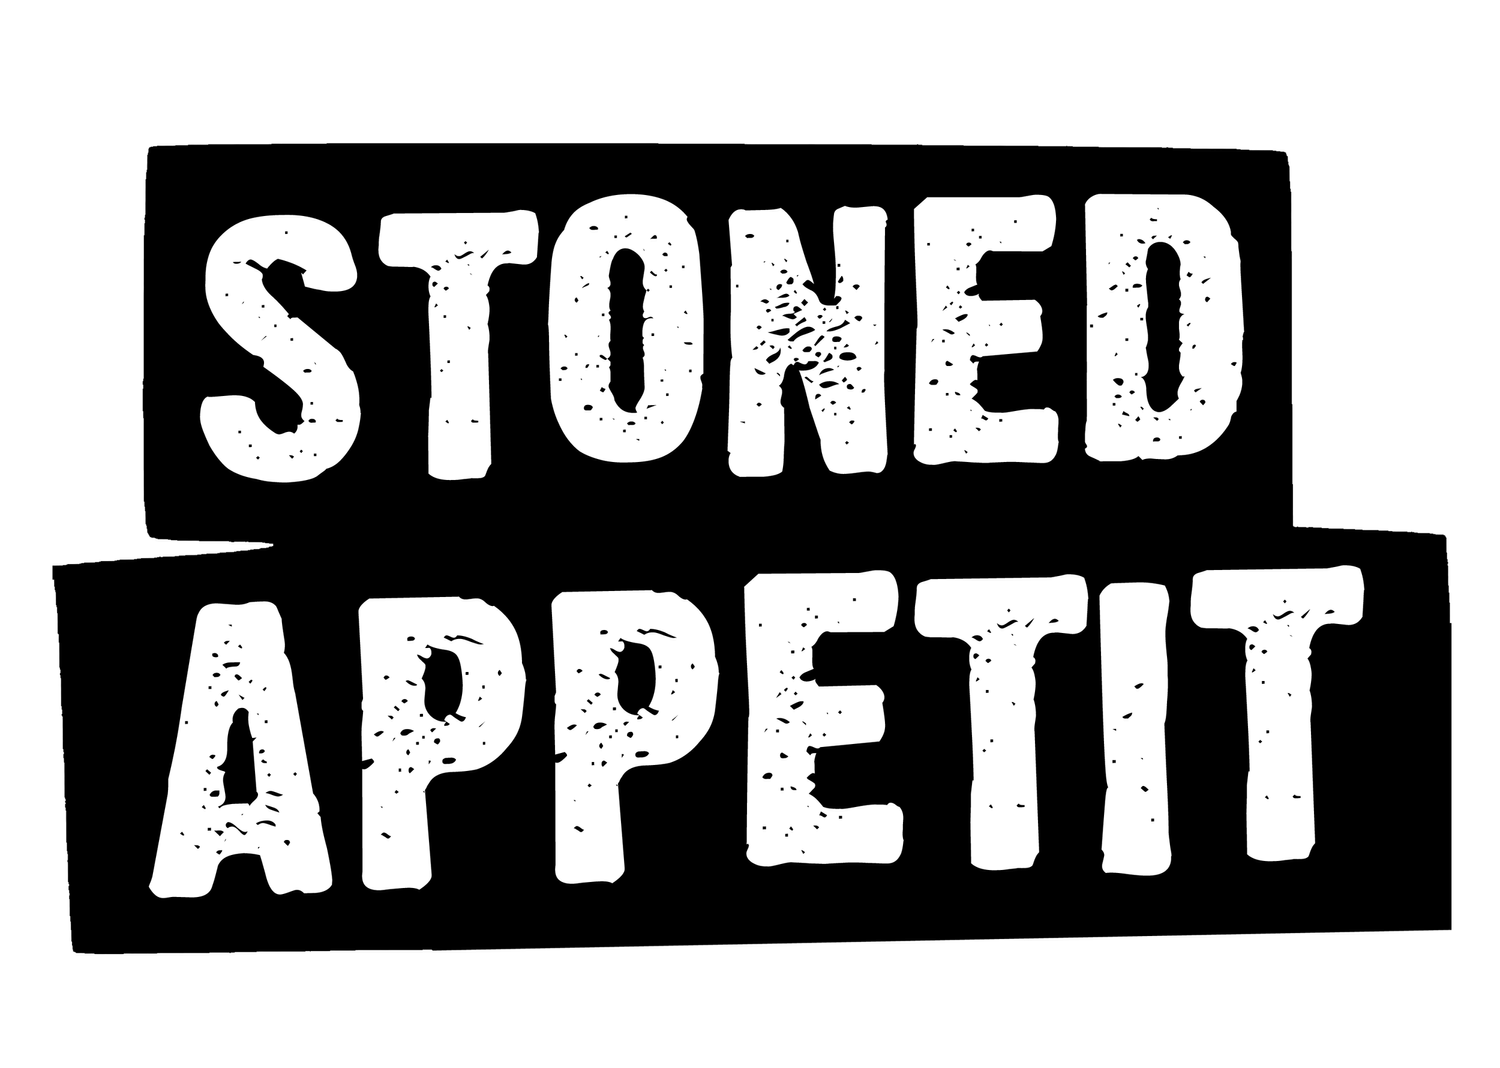 Stoned Appetit